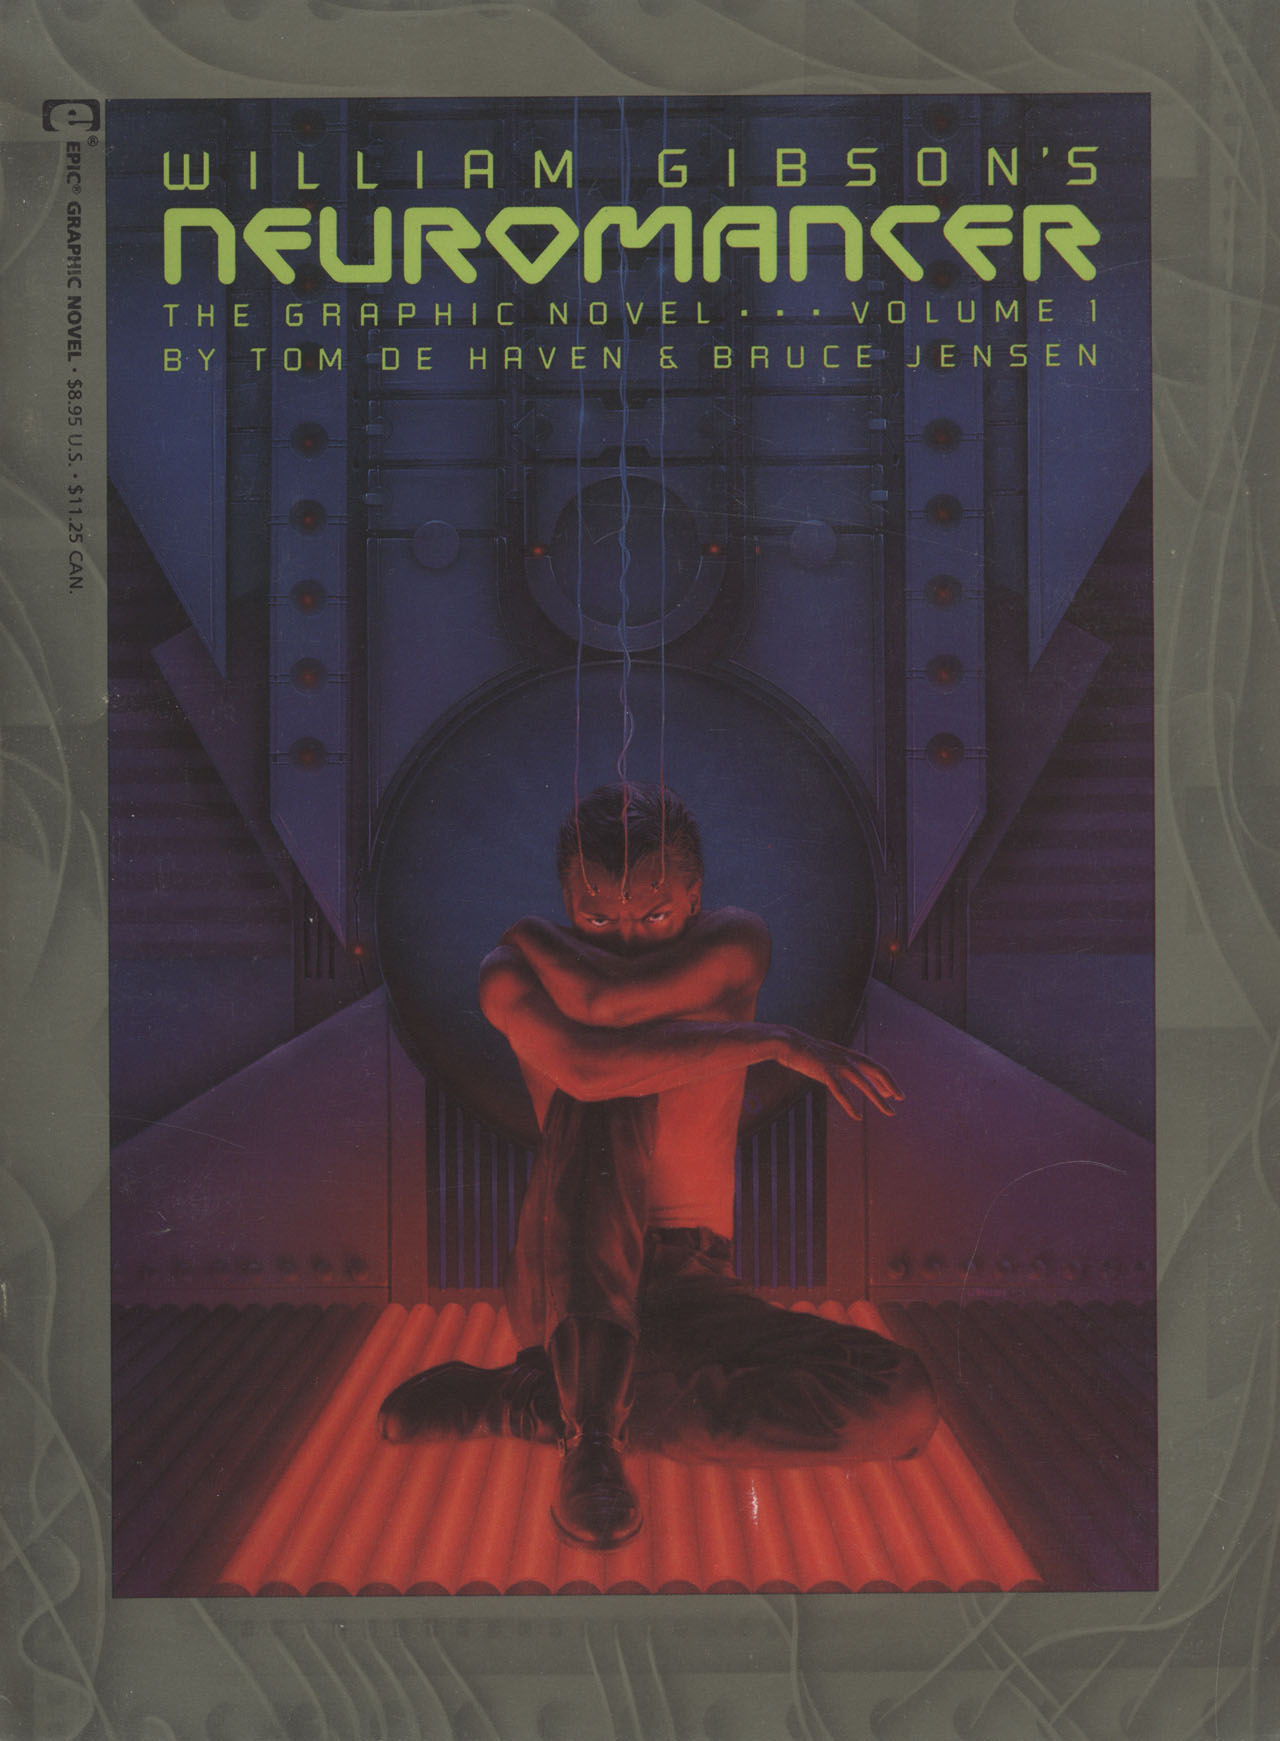 Read online Neuromancer comic -  Issue # Full - 1